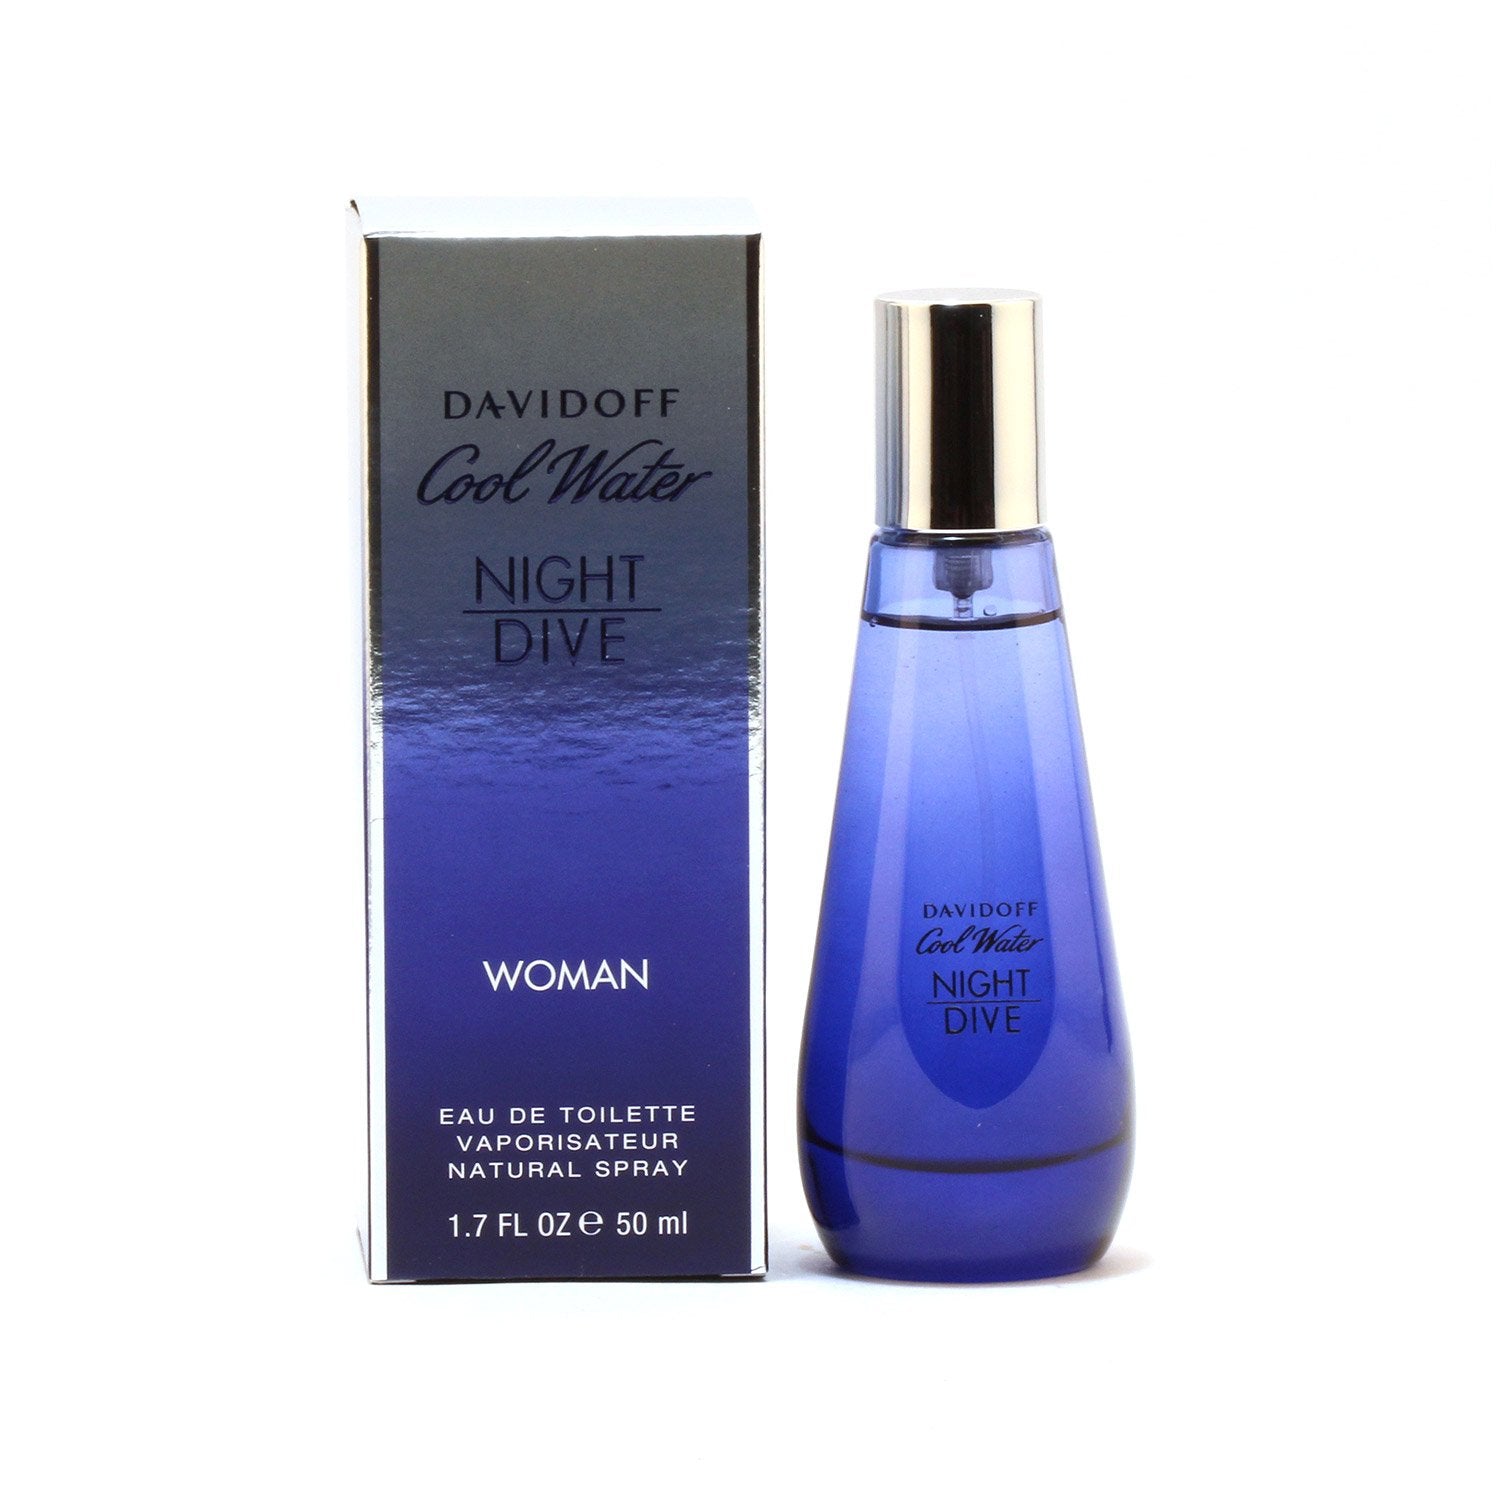 Perfume - COOL WATER NIGHT DIVE FOR WOMEN BY DAVIDOFF - EAU DE TOILETTE SPRAY, 1.7 OZ